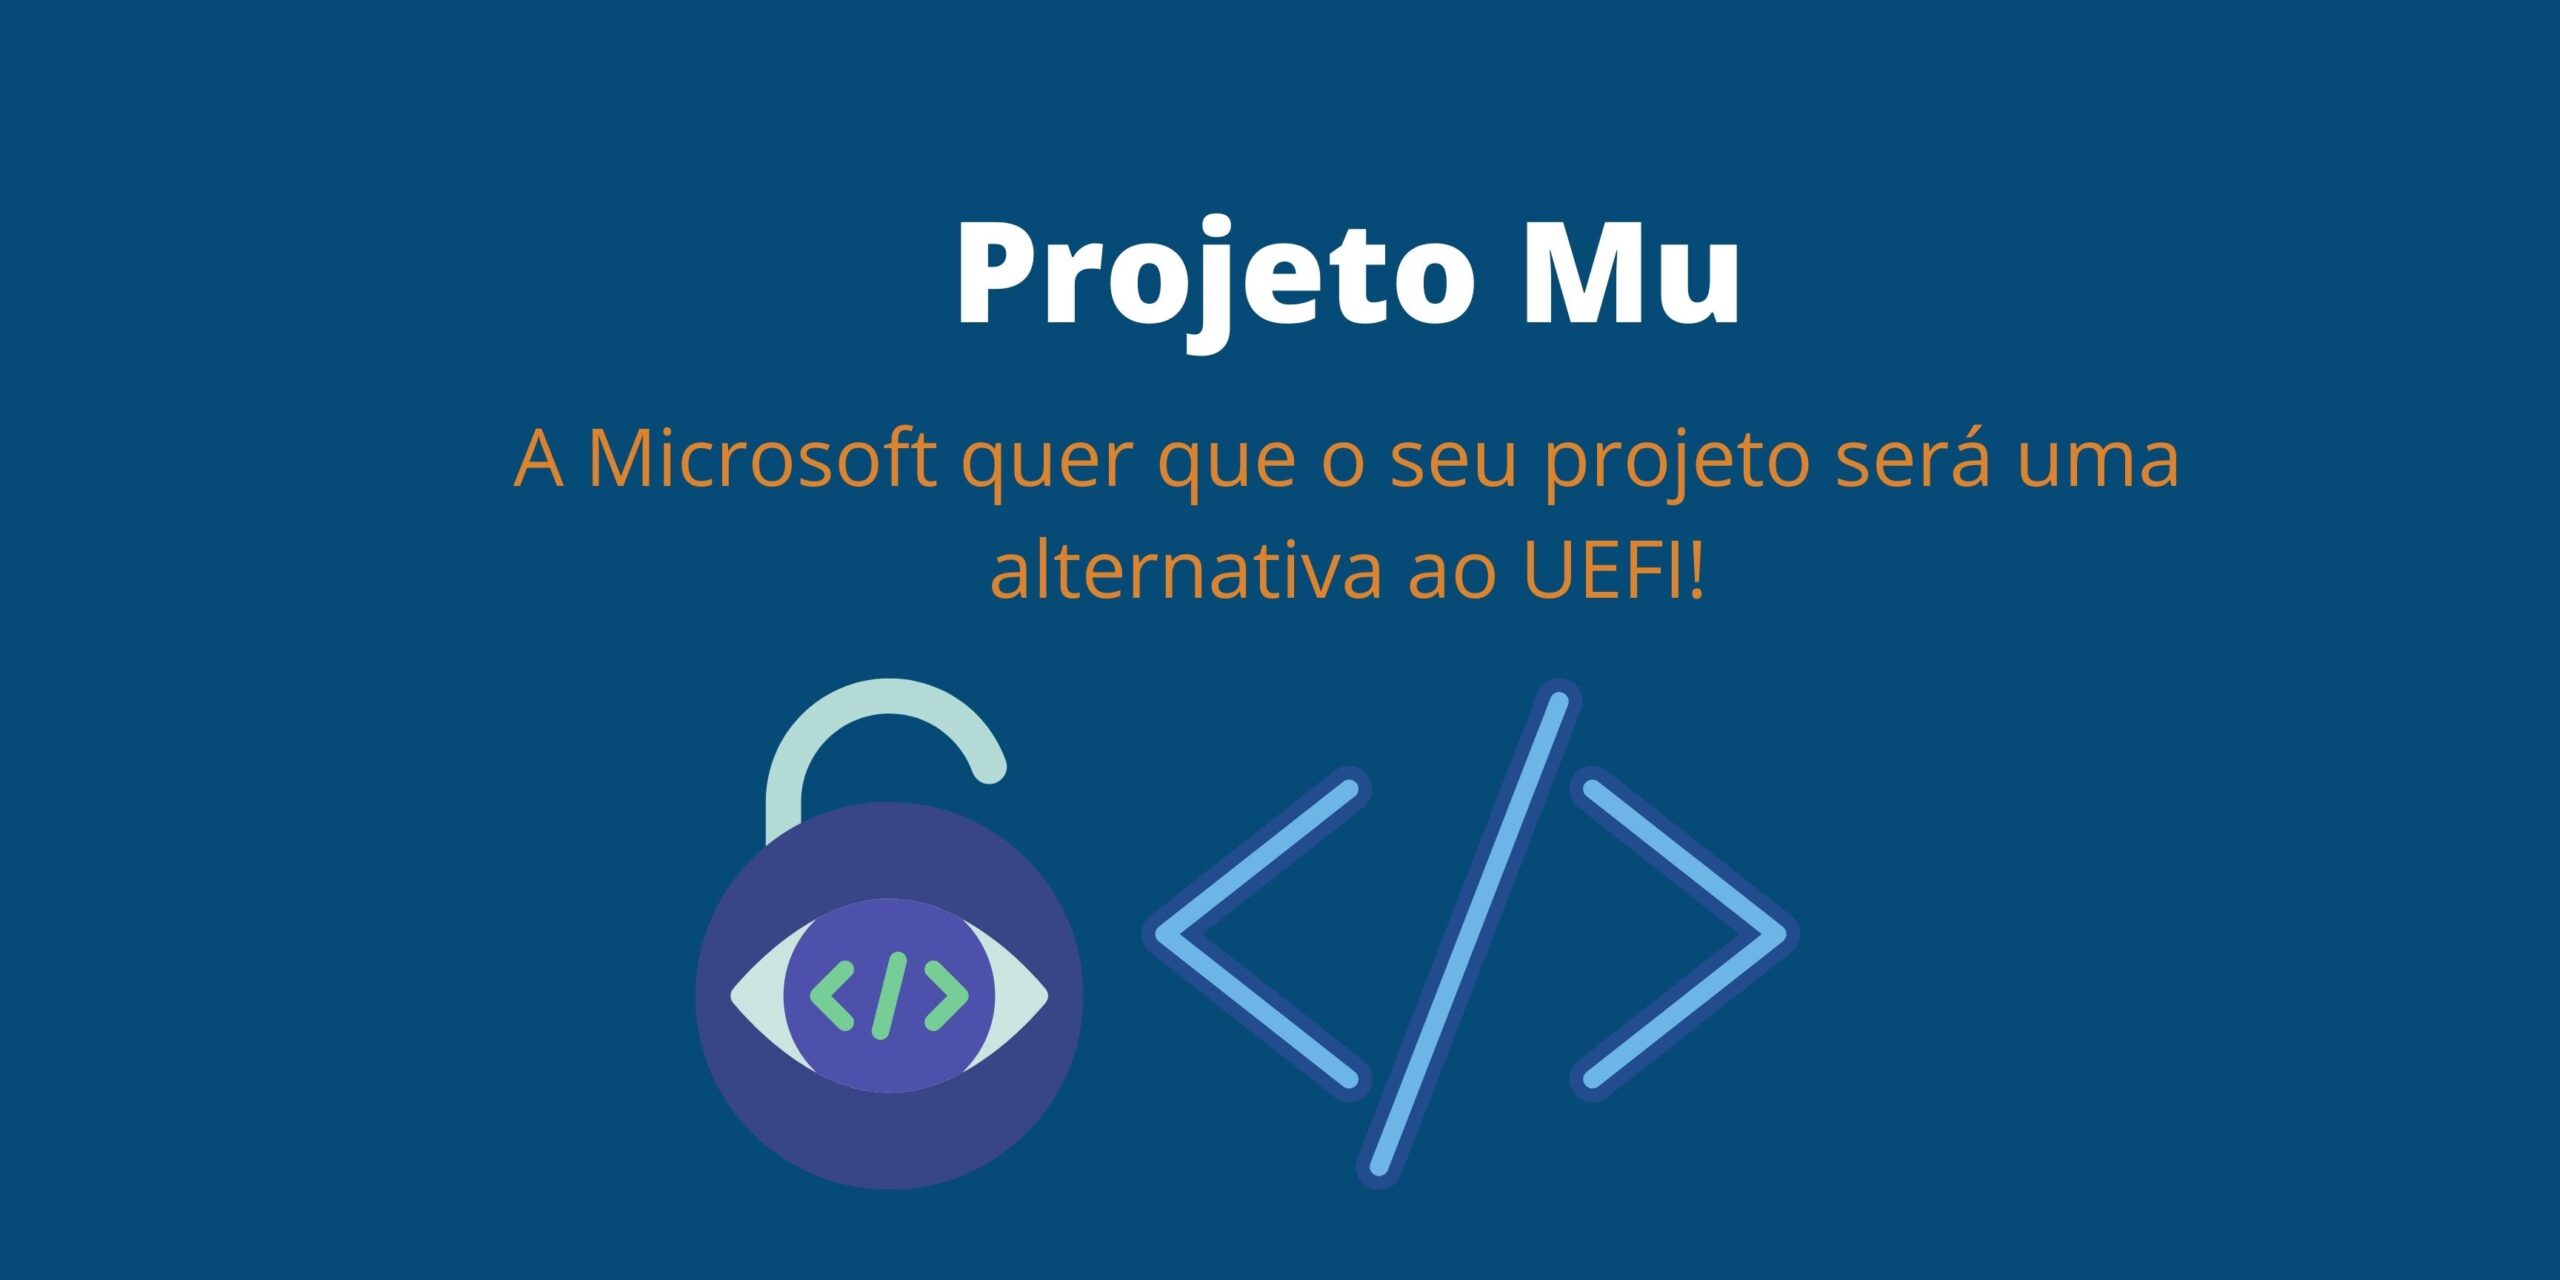 Conheça o Projeto Mu da Microsoft! Alternativa UEFI de código aberto!